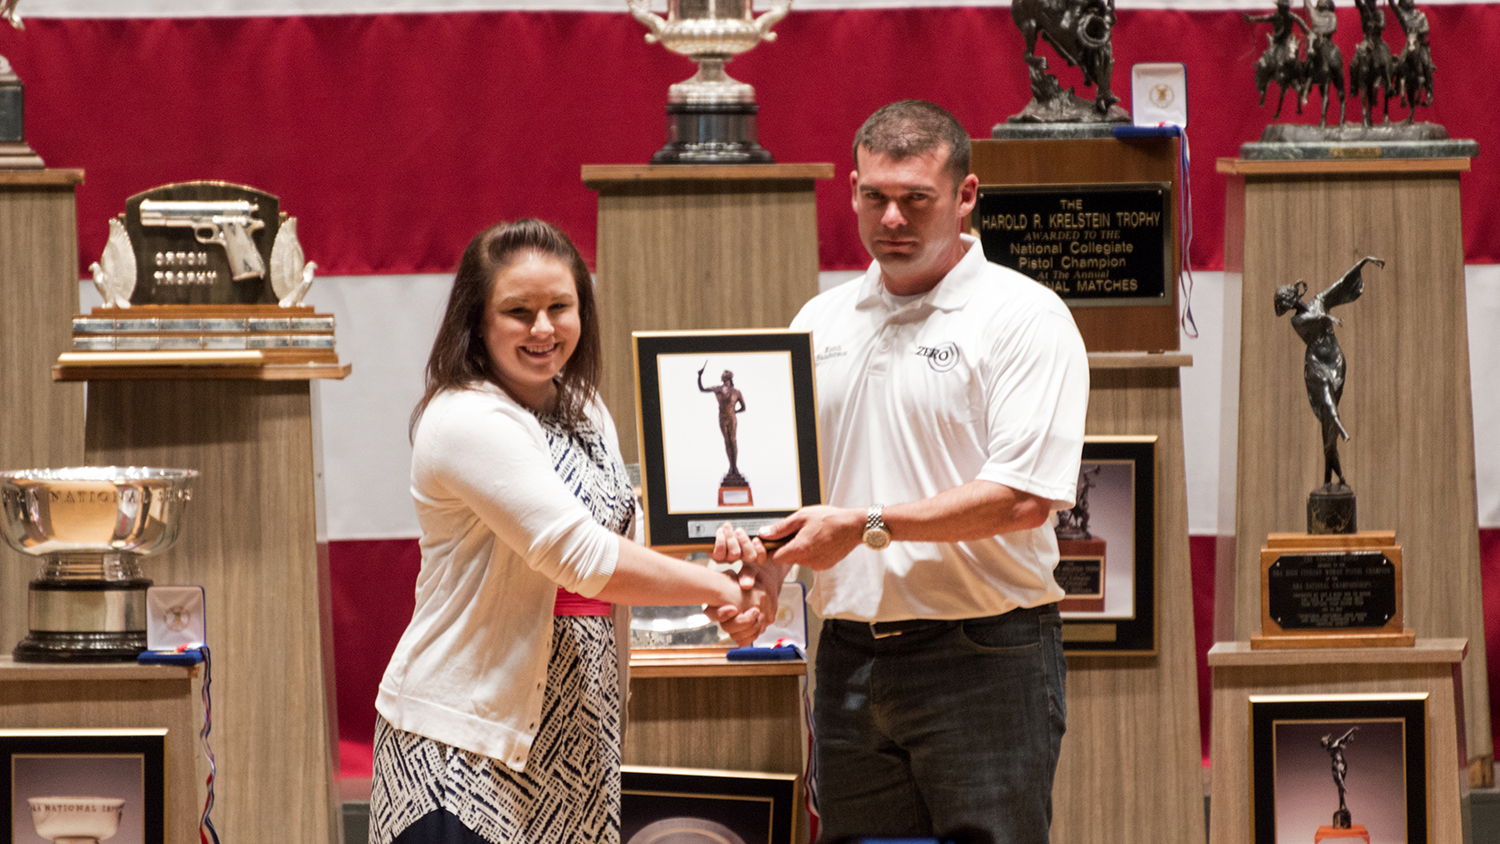 SFC Keith Sanderson Wins 2015 NRA National Pistol Championship